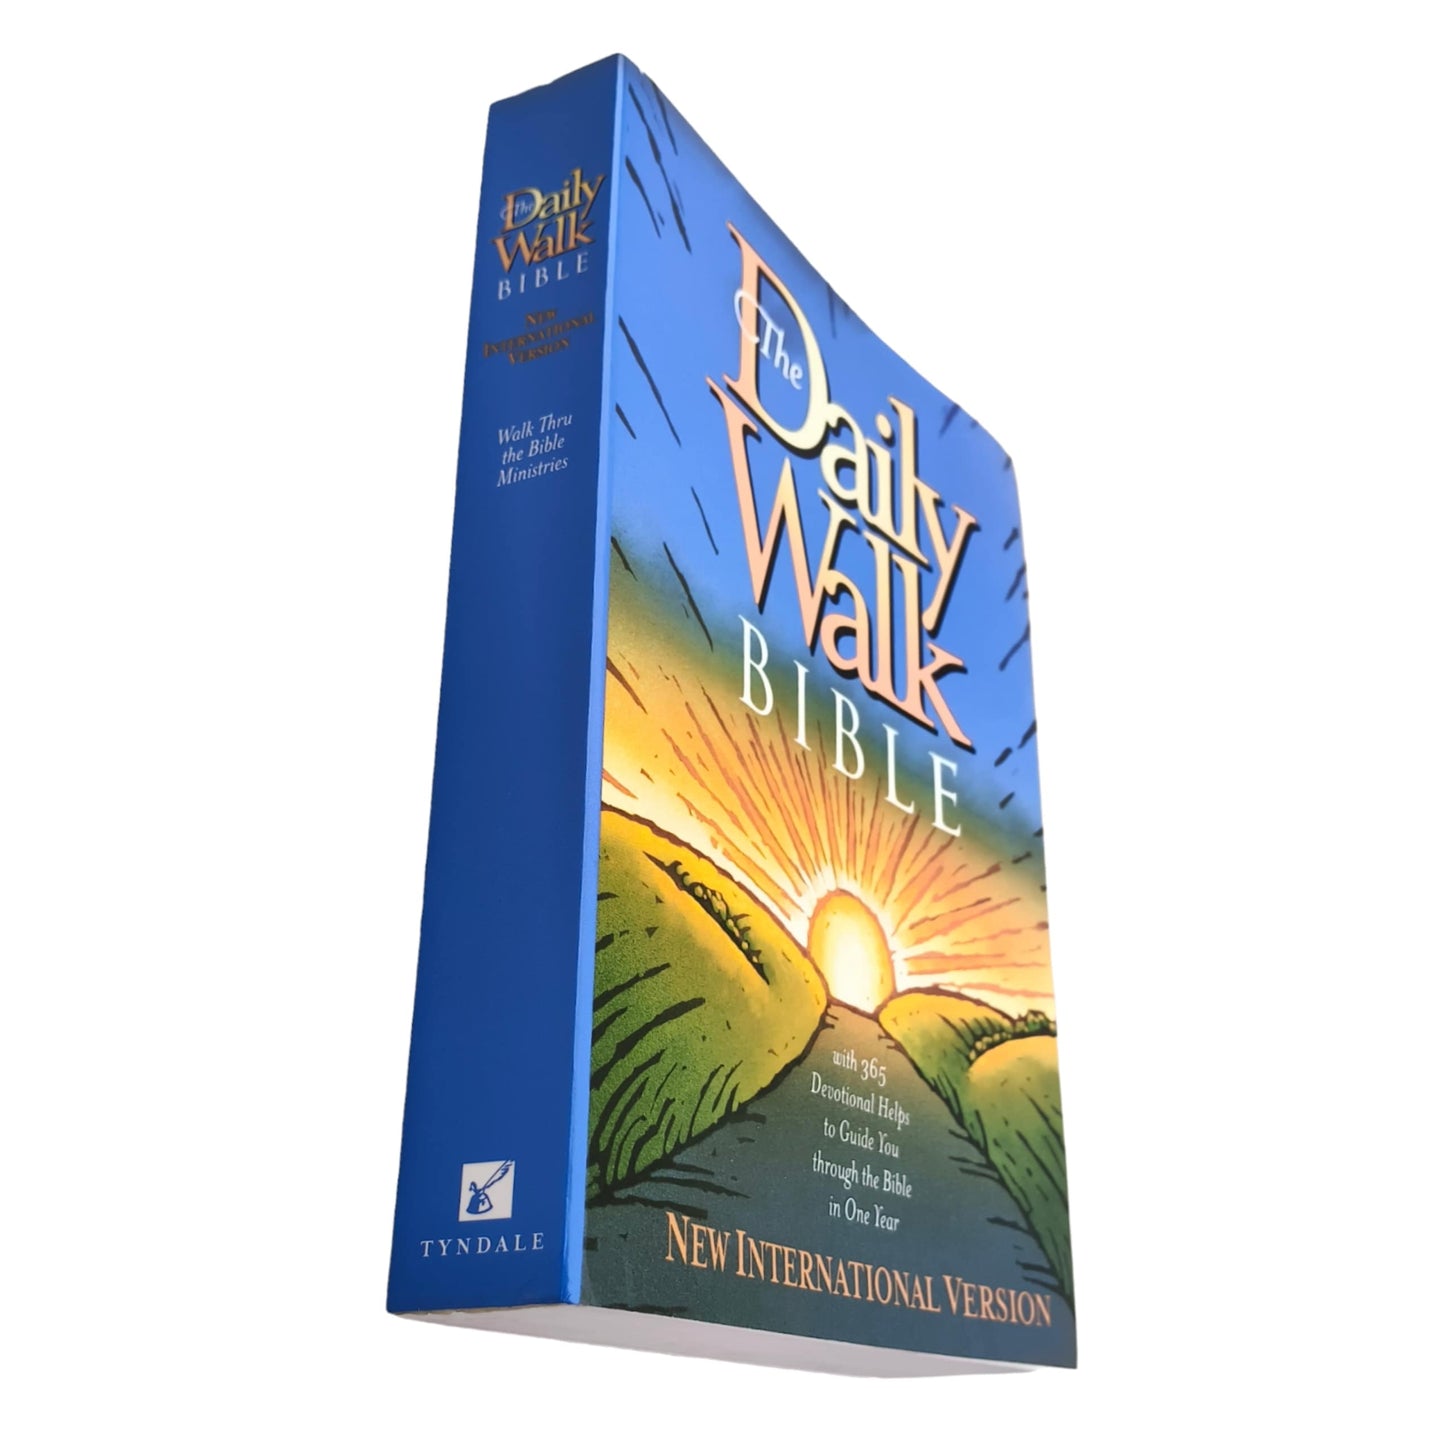 Daily Walk Bible NIV Version